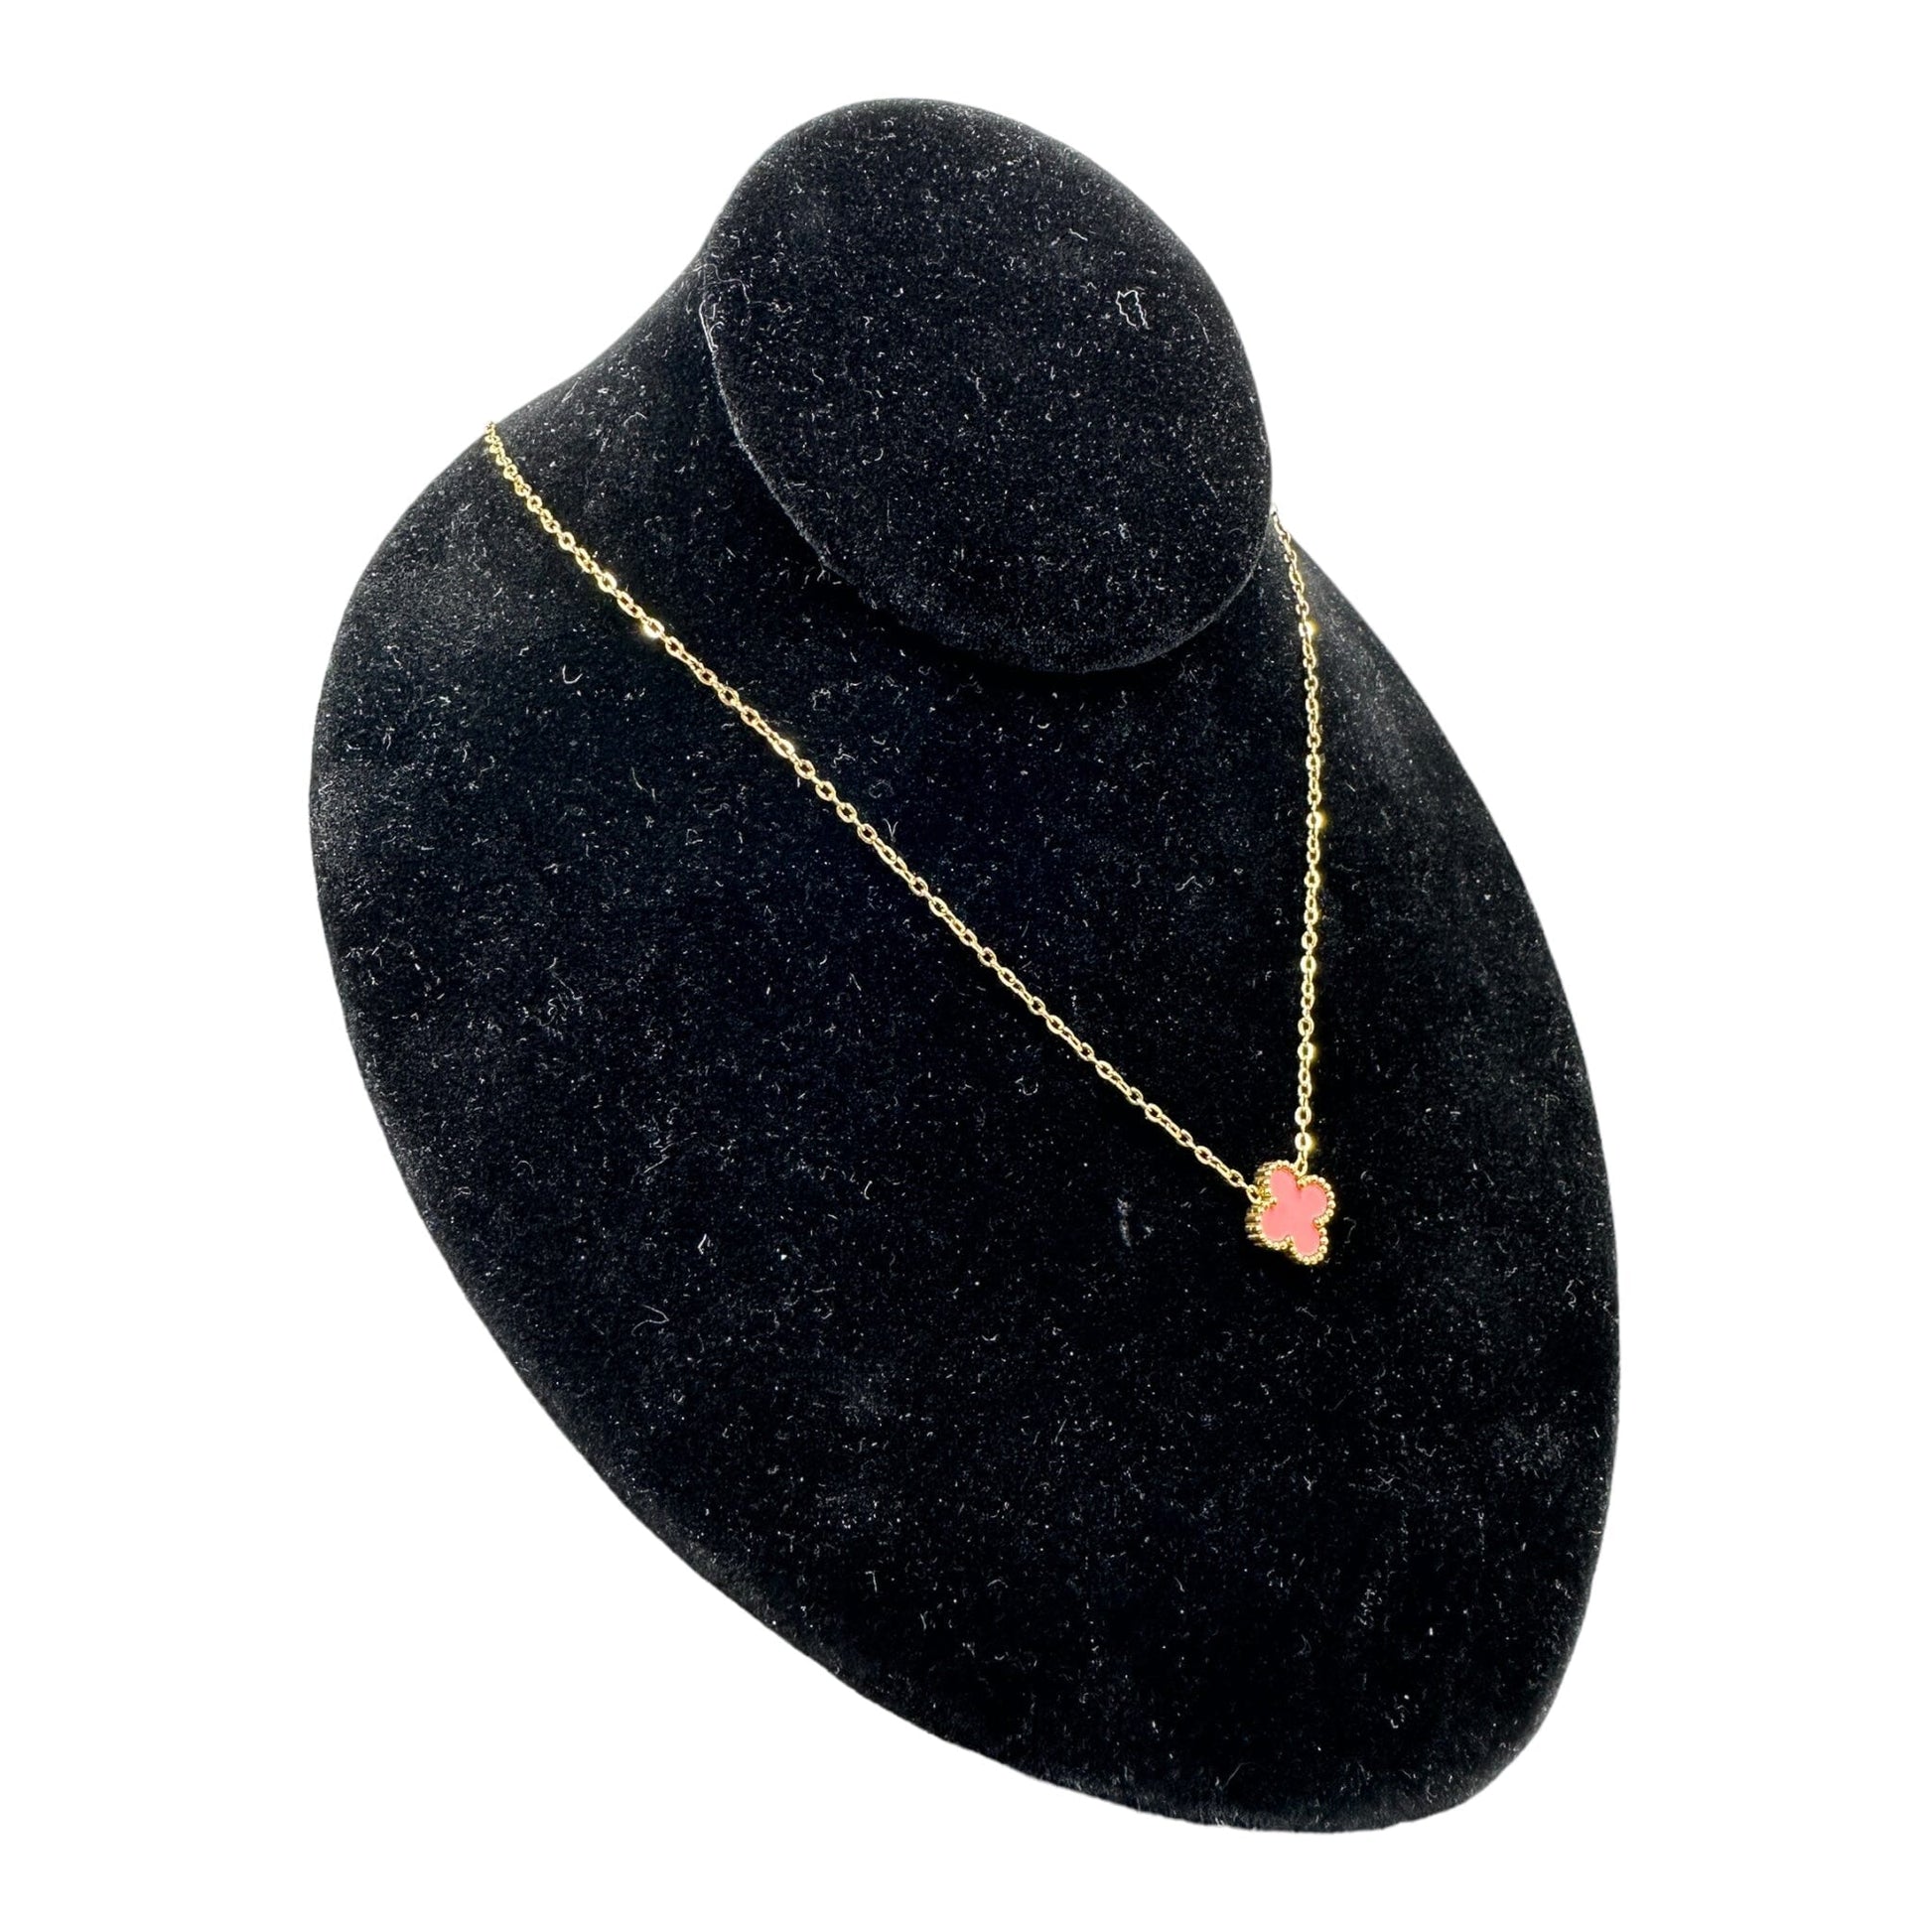 Kaitlin Clover Pink Gold Necklace necklace Trendzio Jewelry 